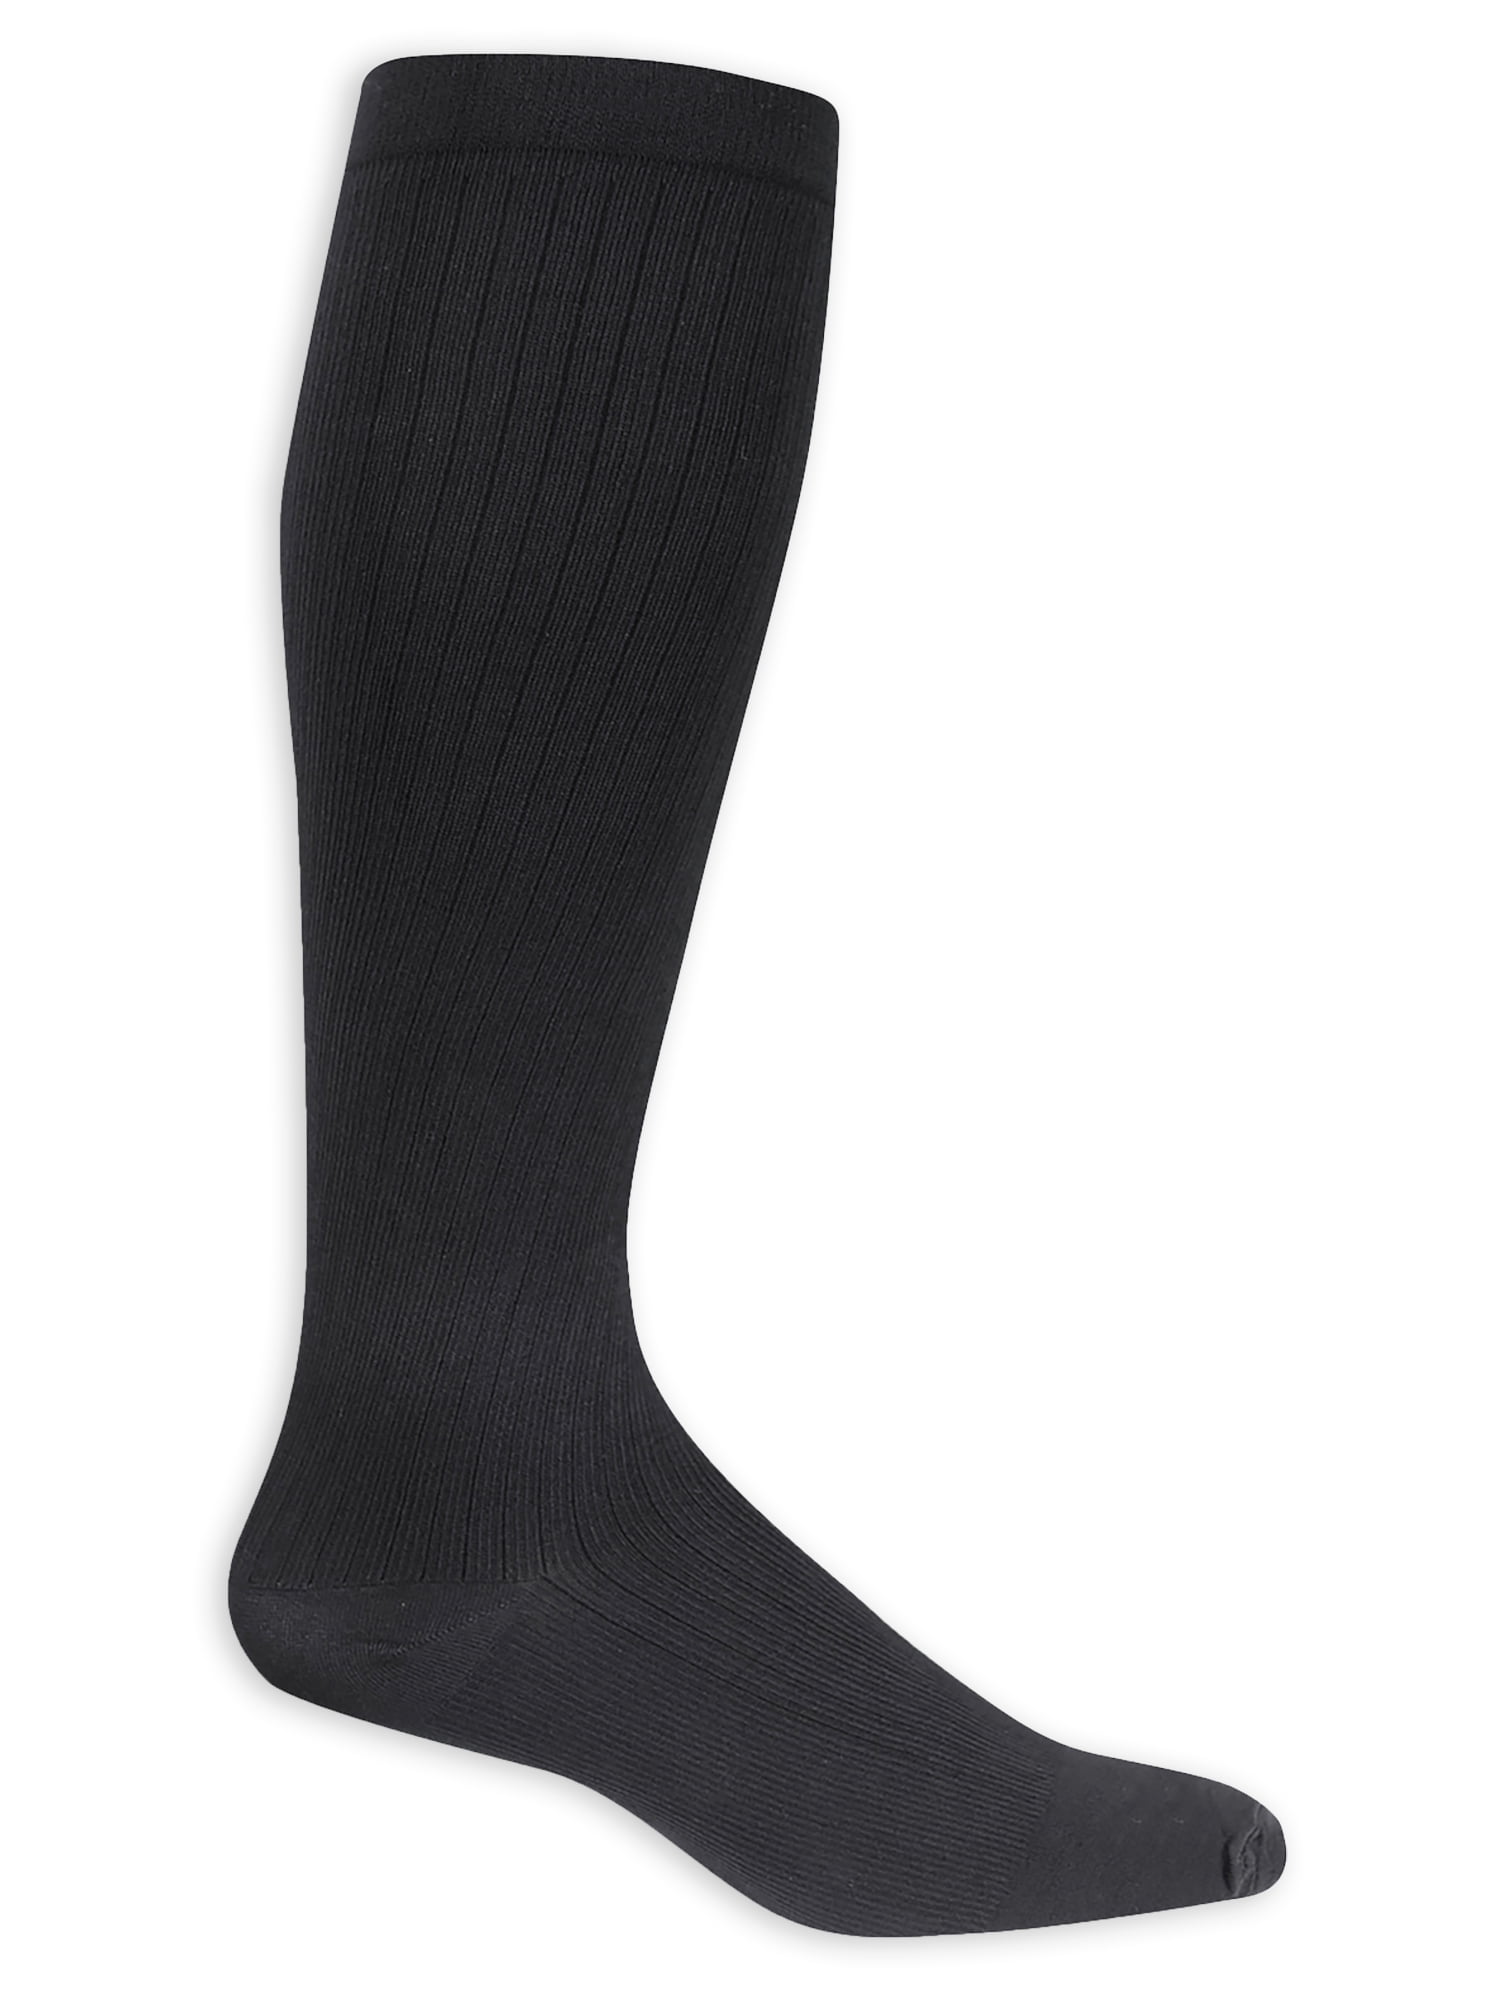 Men's Microfiber Medical Grade Firm Compression Socks 1 Pack - Walmart.com